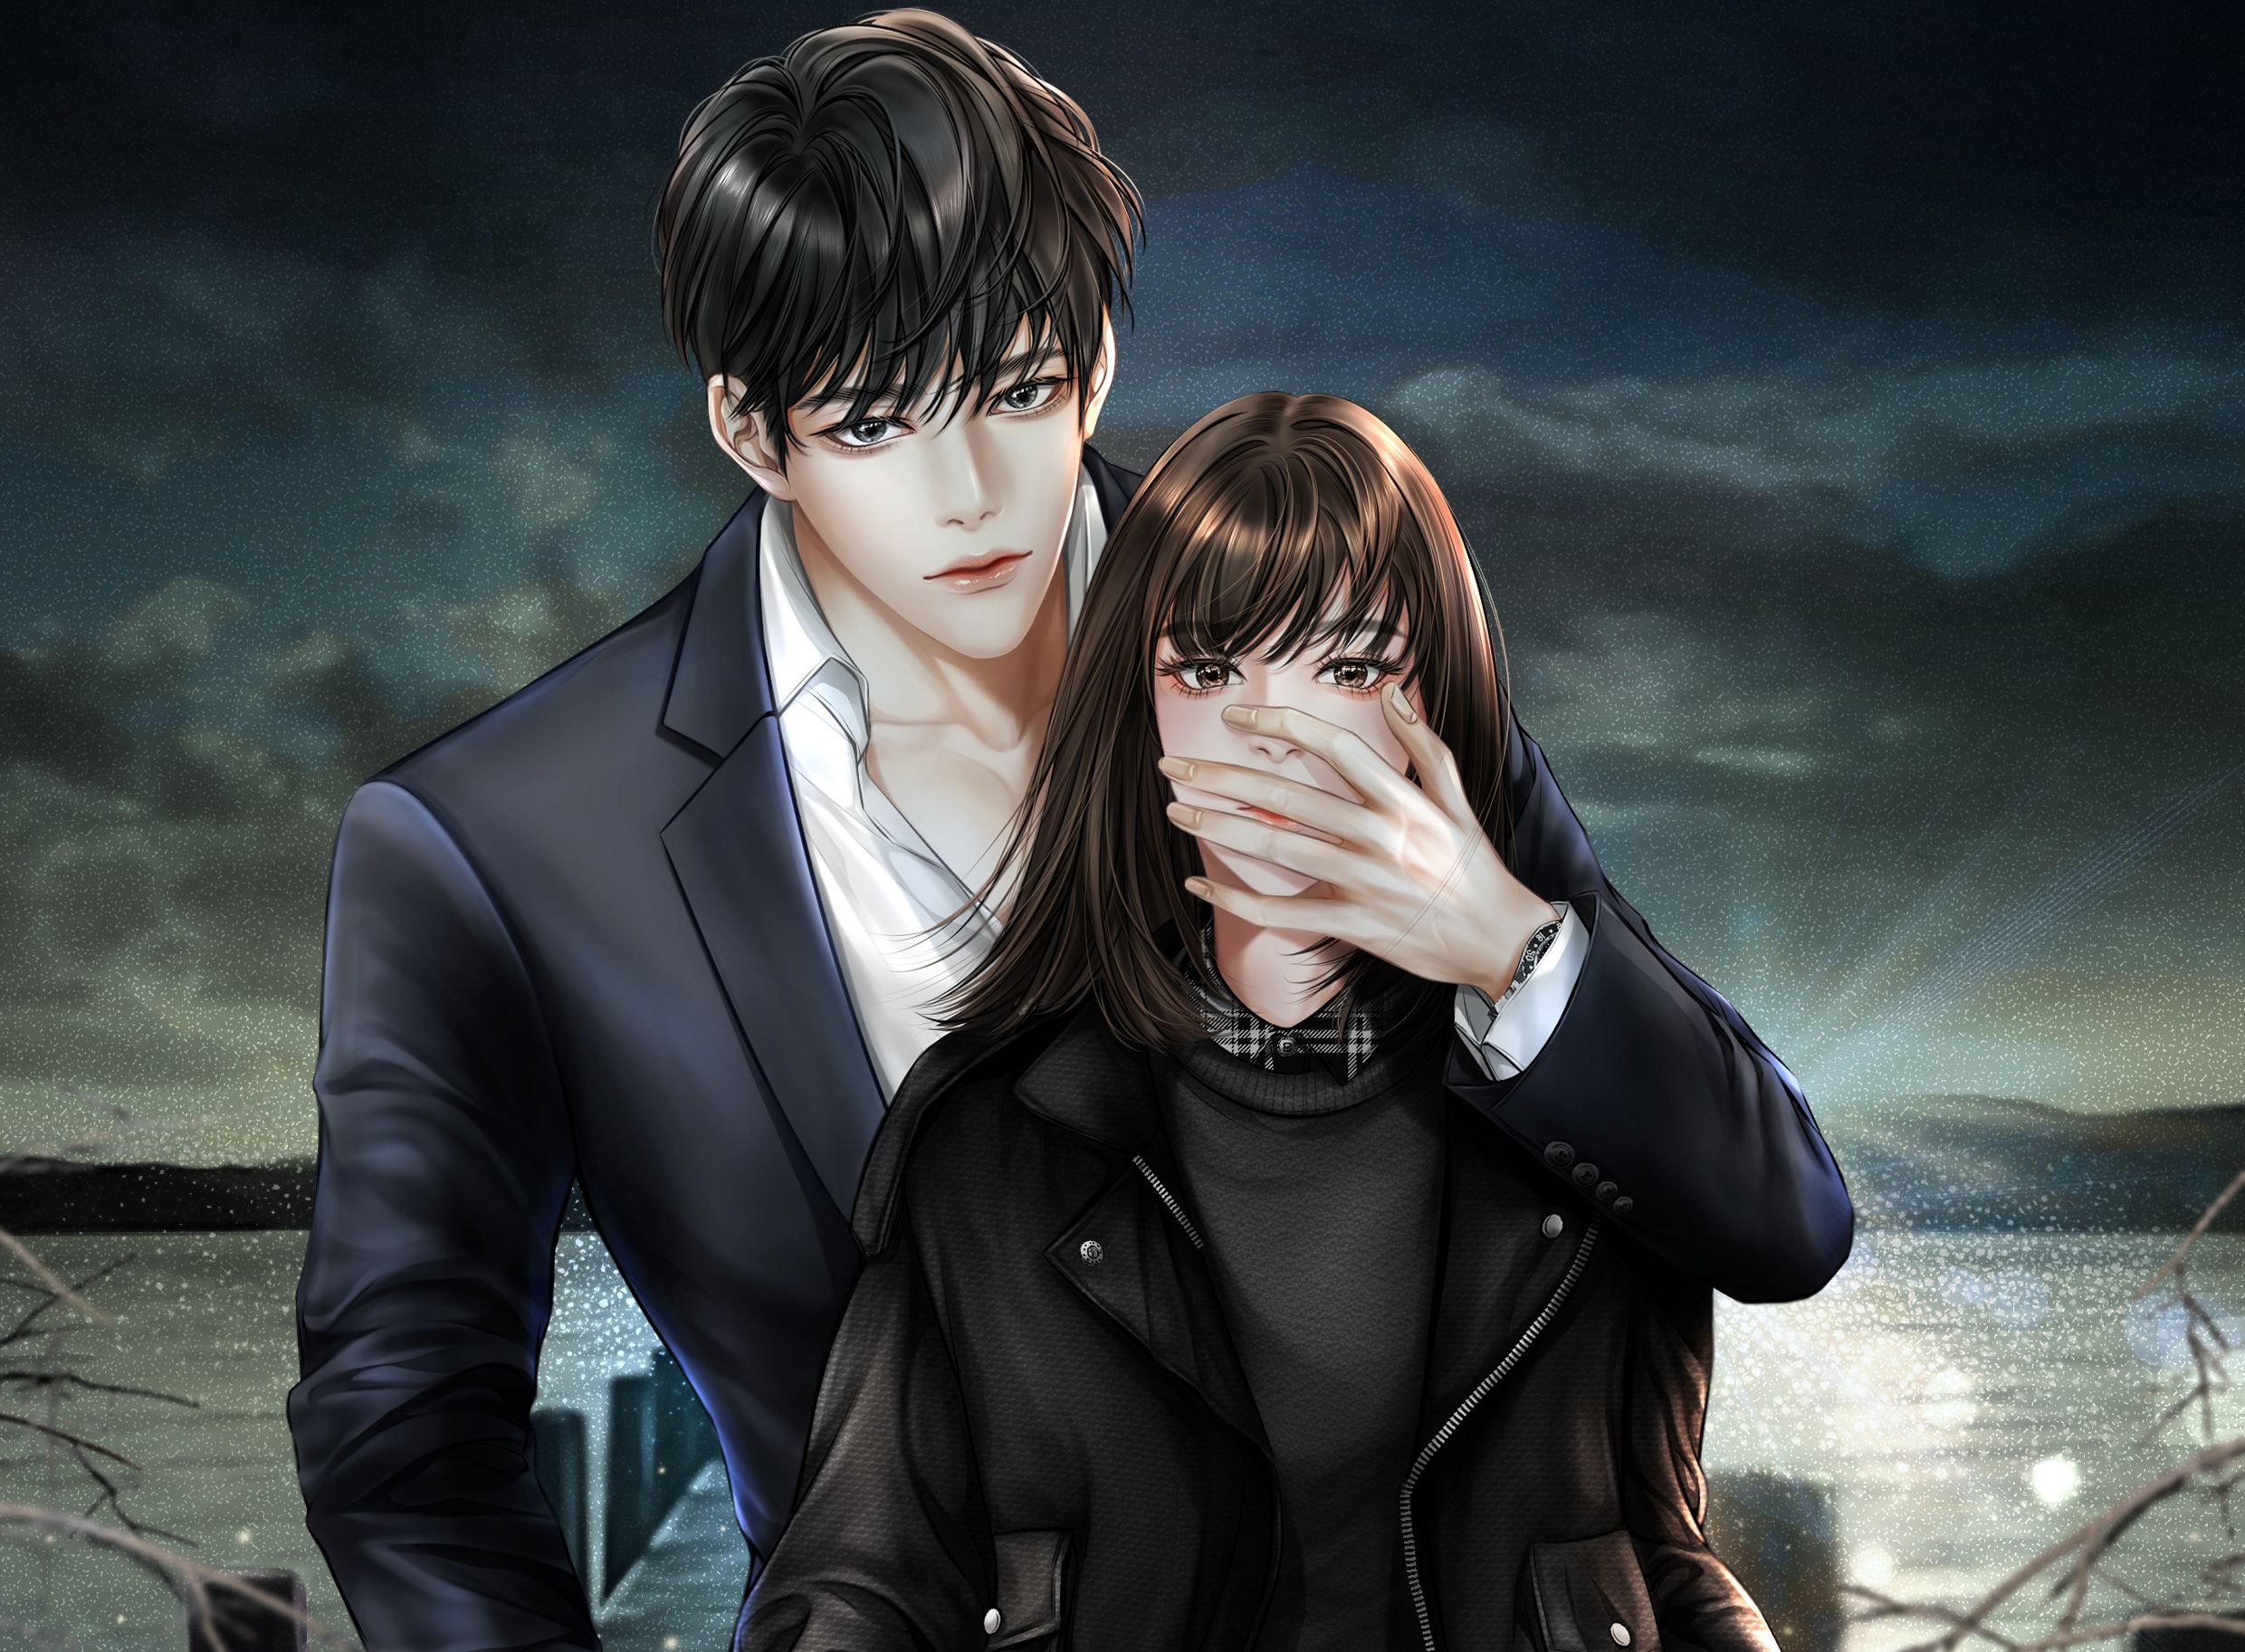 Anime Boy Meets Girl HD Wallpaper